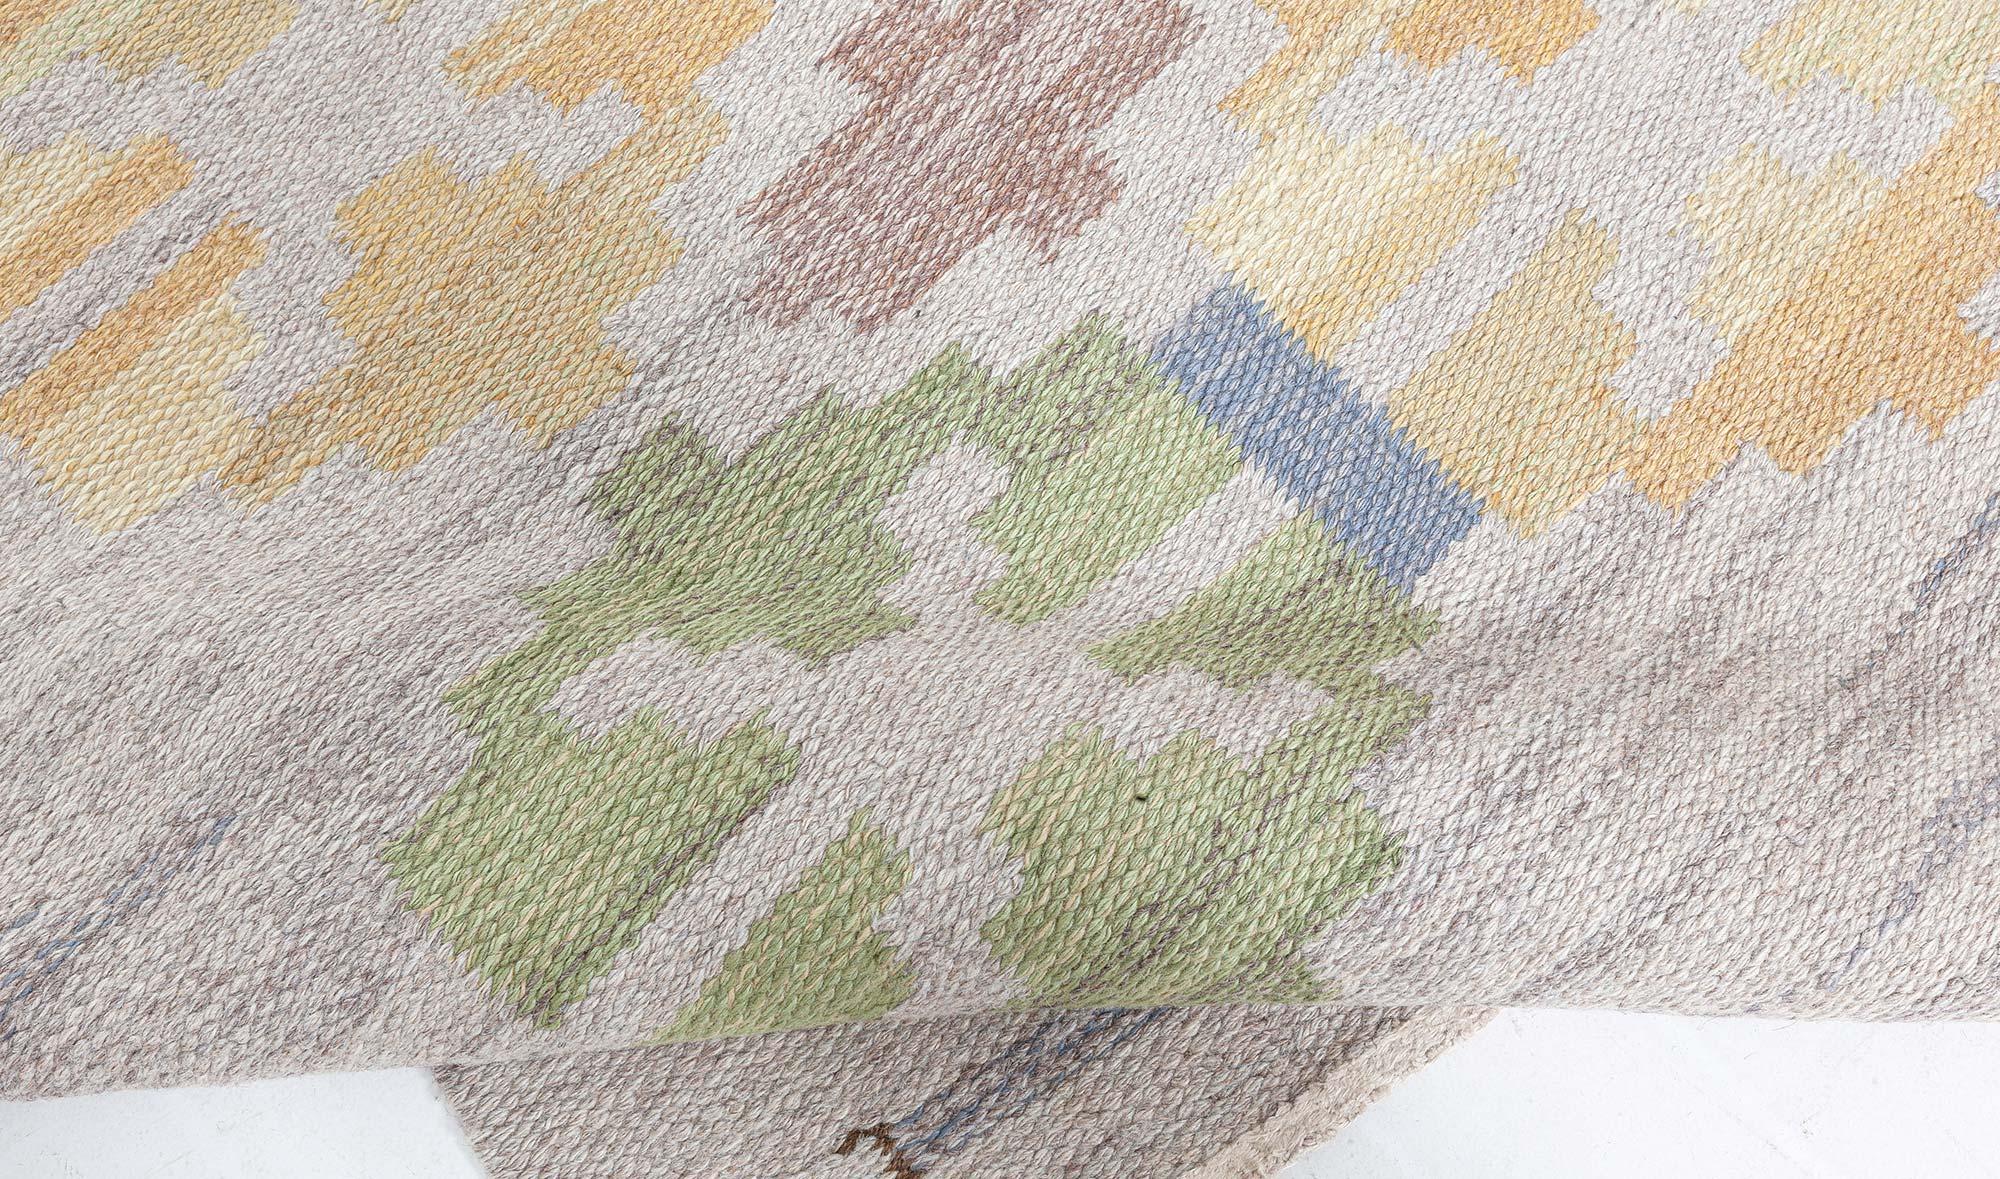 Swedish Flat Woven rug by Judith Johansson
Size: 4'5